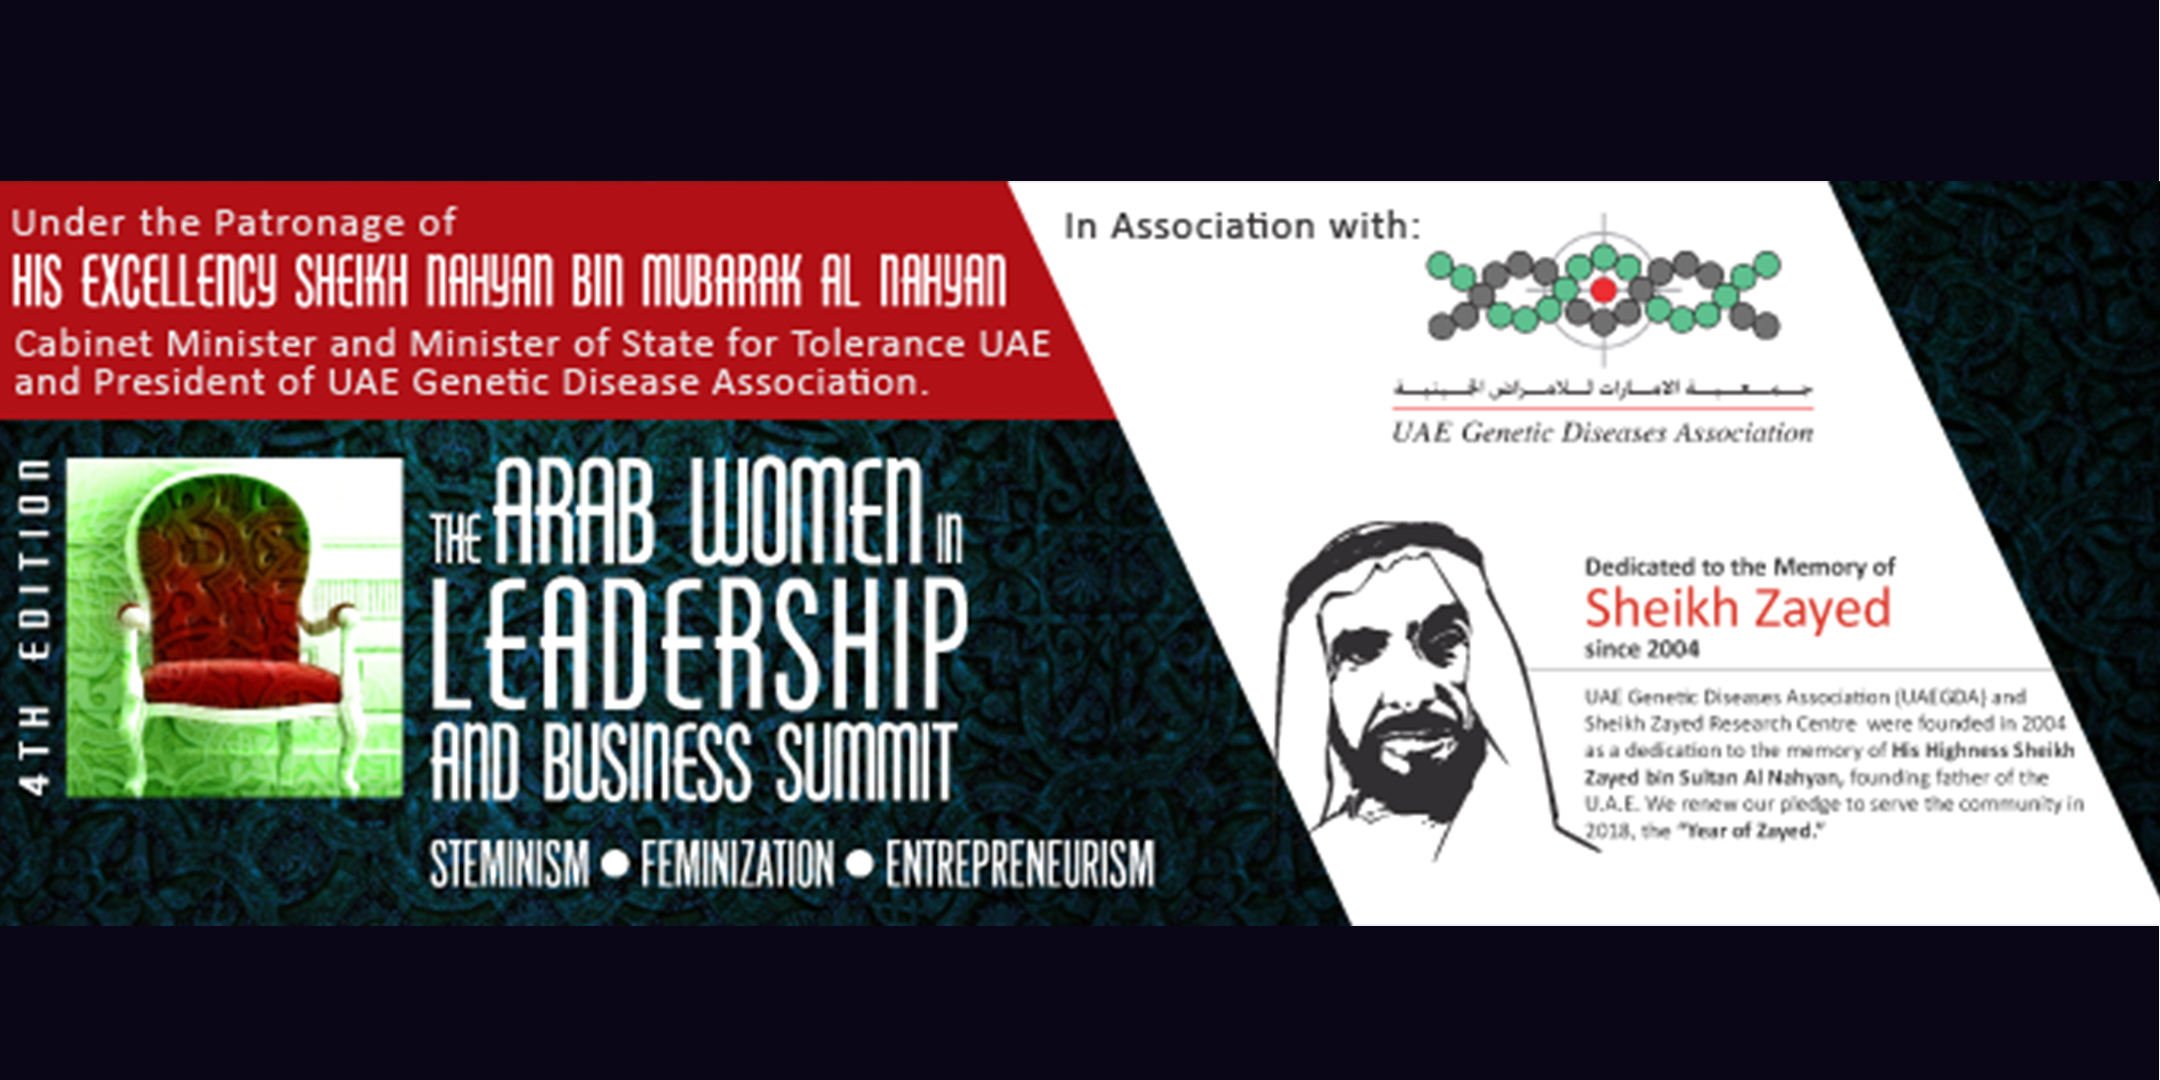 Arab Women in Leadership and Business Summit : 4th Edition, Dubai, United Arab Emirates